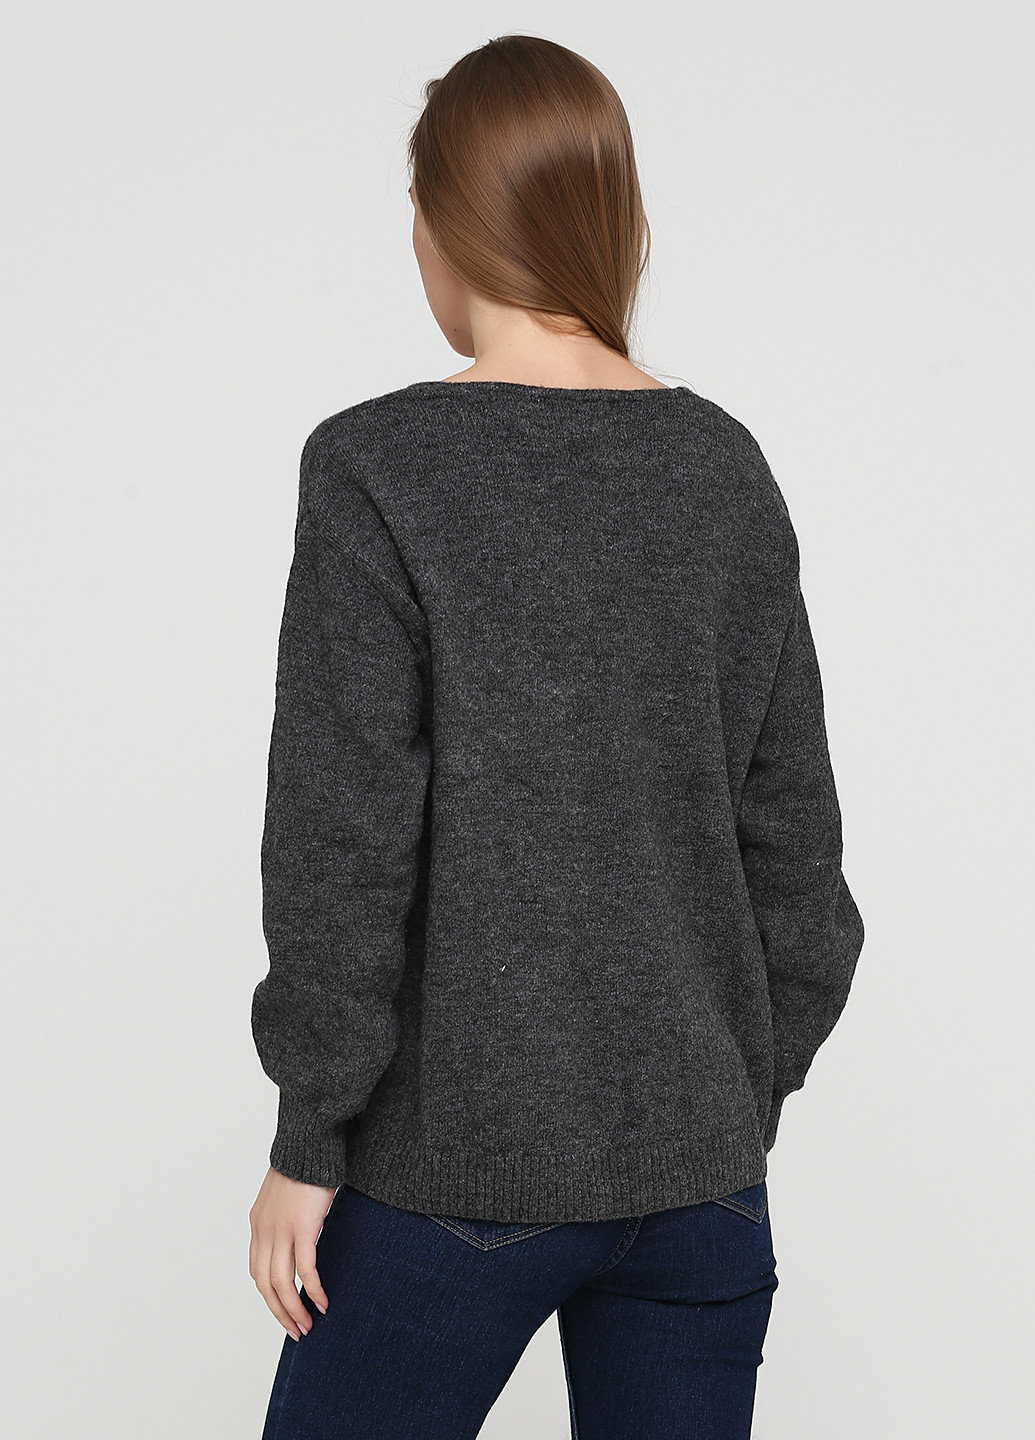 Темно-серый демисезонный пуловер пуловер CHD